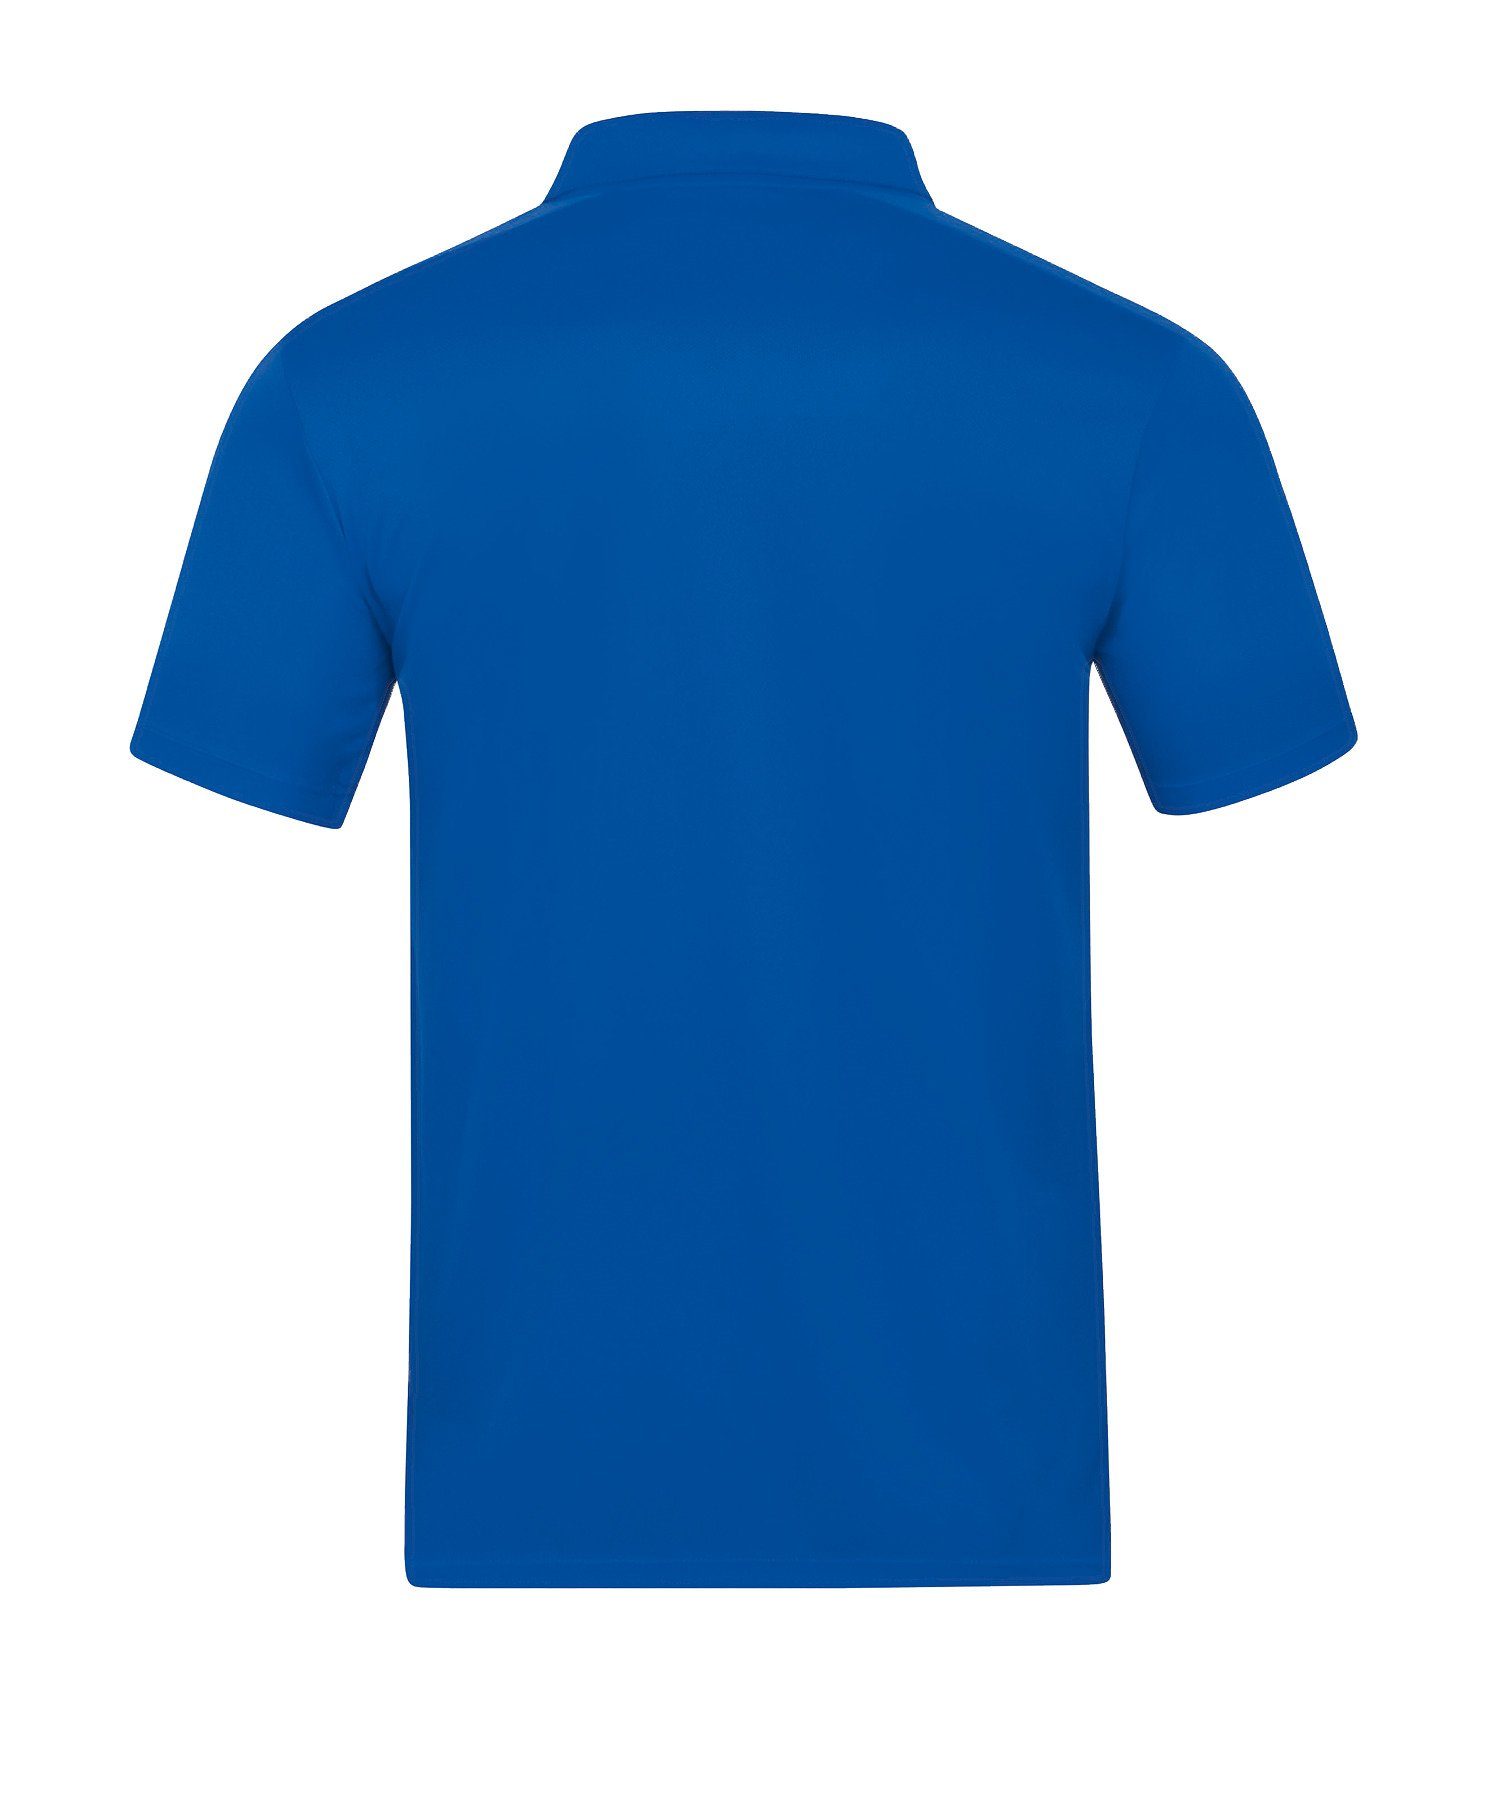 Jako Blauweiss Classico T-Shirt Poloshirt default